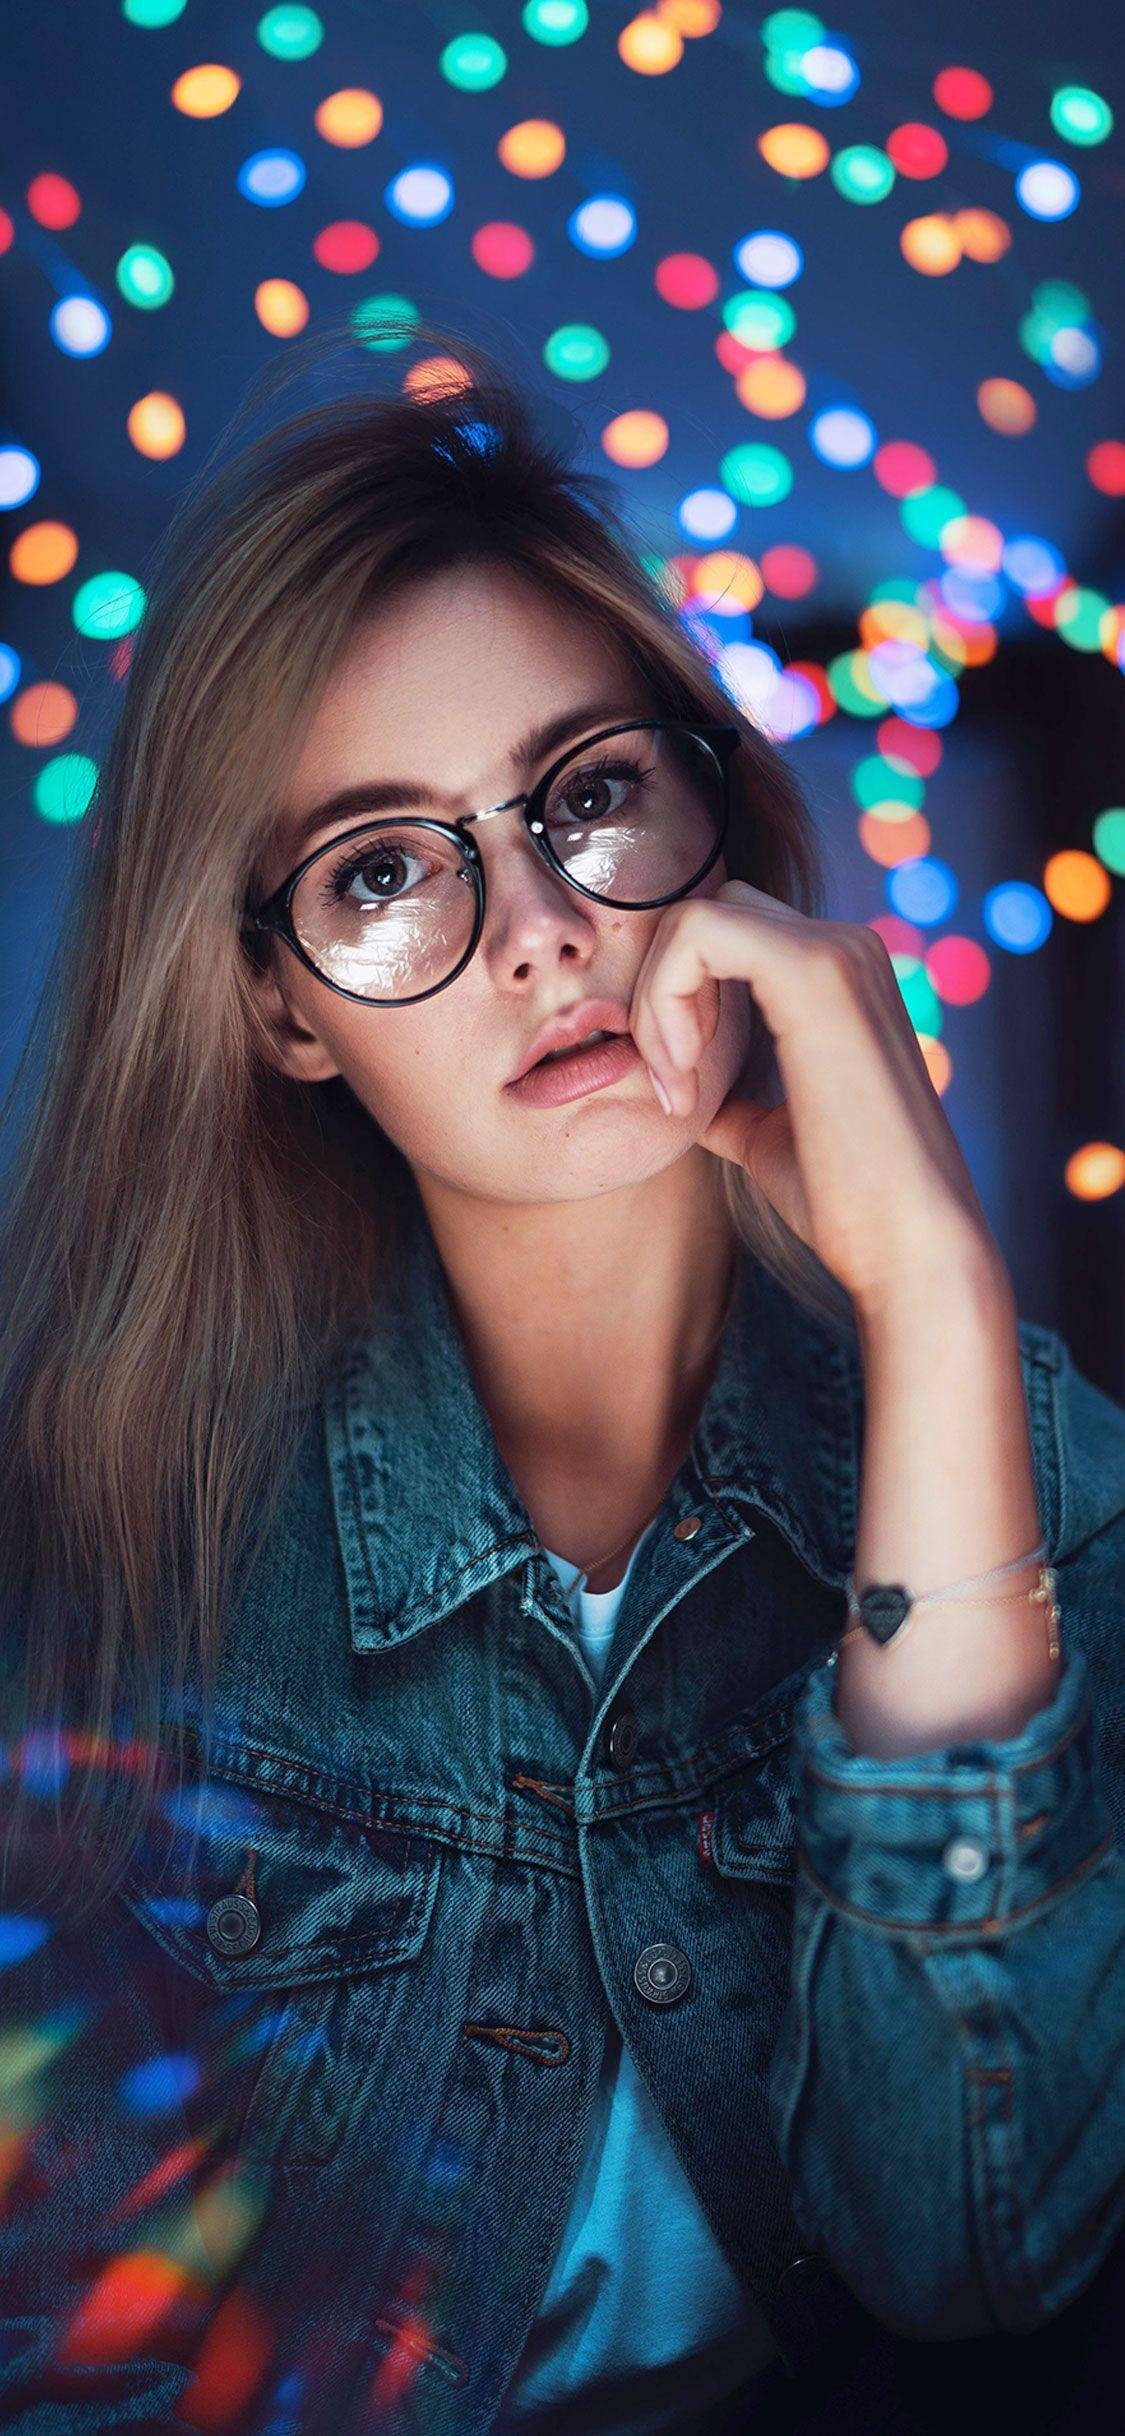 Cute Girl In Glasses - Bokeh Background